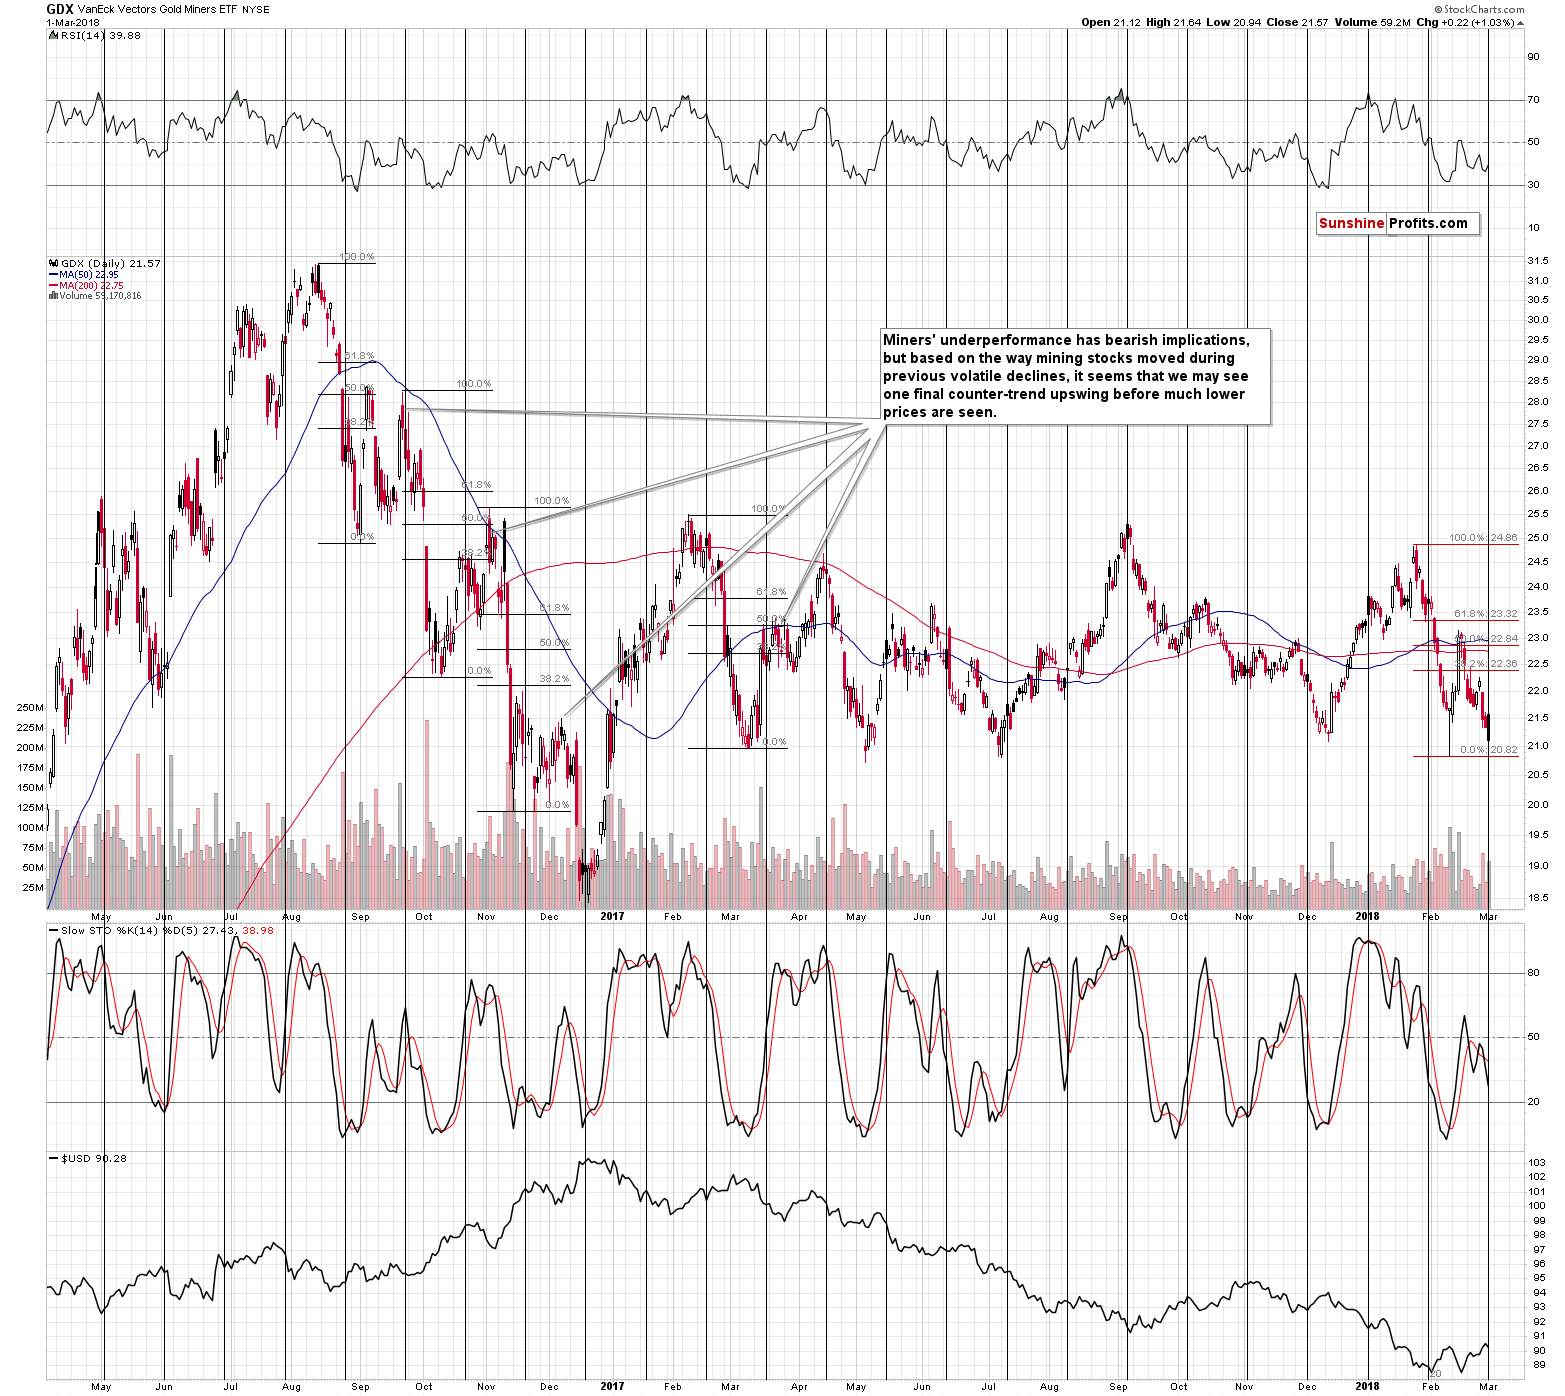 GDX - Market Vectors Gold Miners - Gold mining stocks